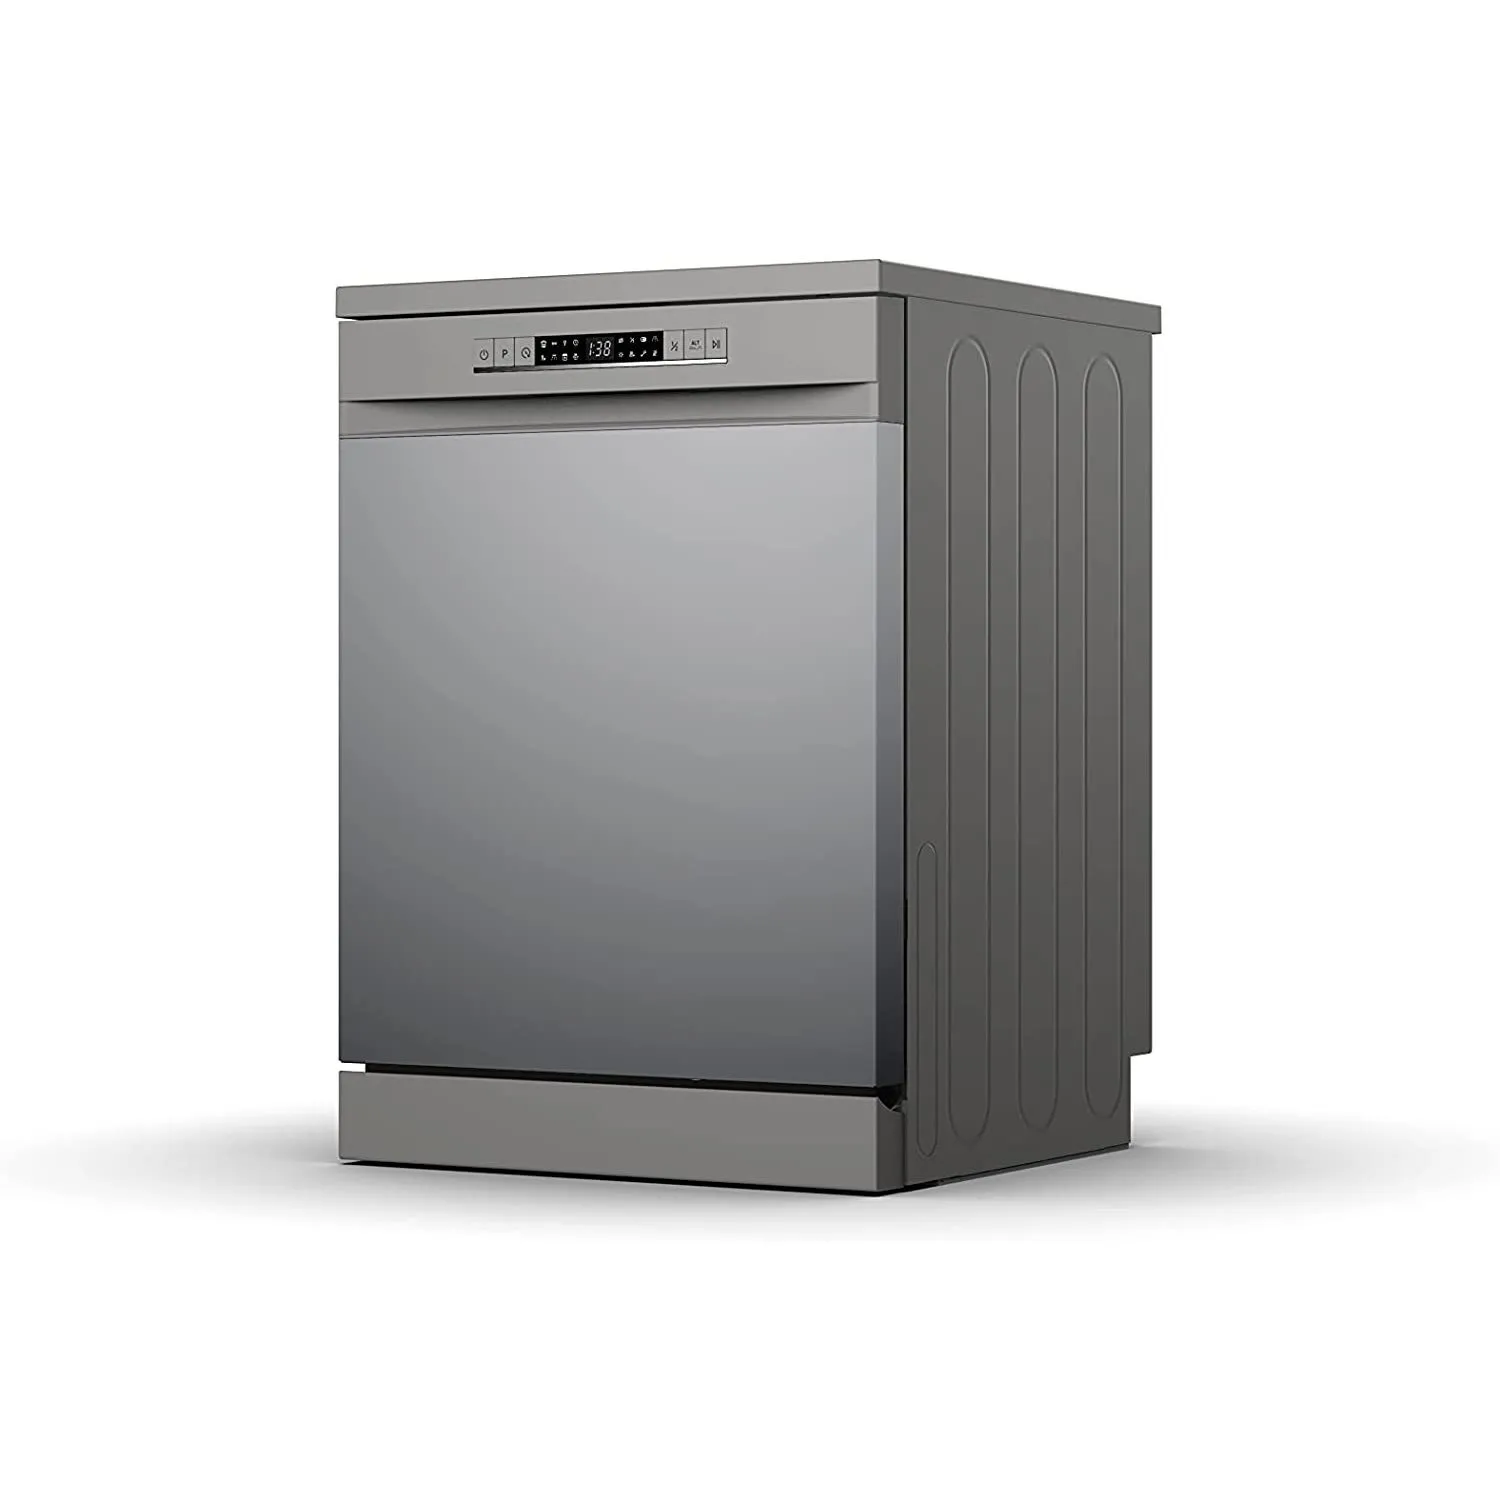 Hisense 13 Place Dishwasher Free Standing Silver Model HS622E90G | 1 Year Warranty.